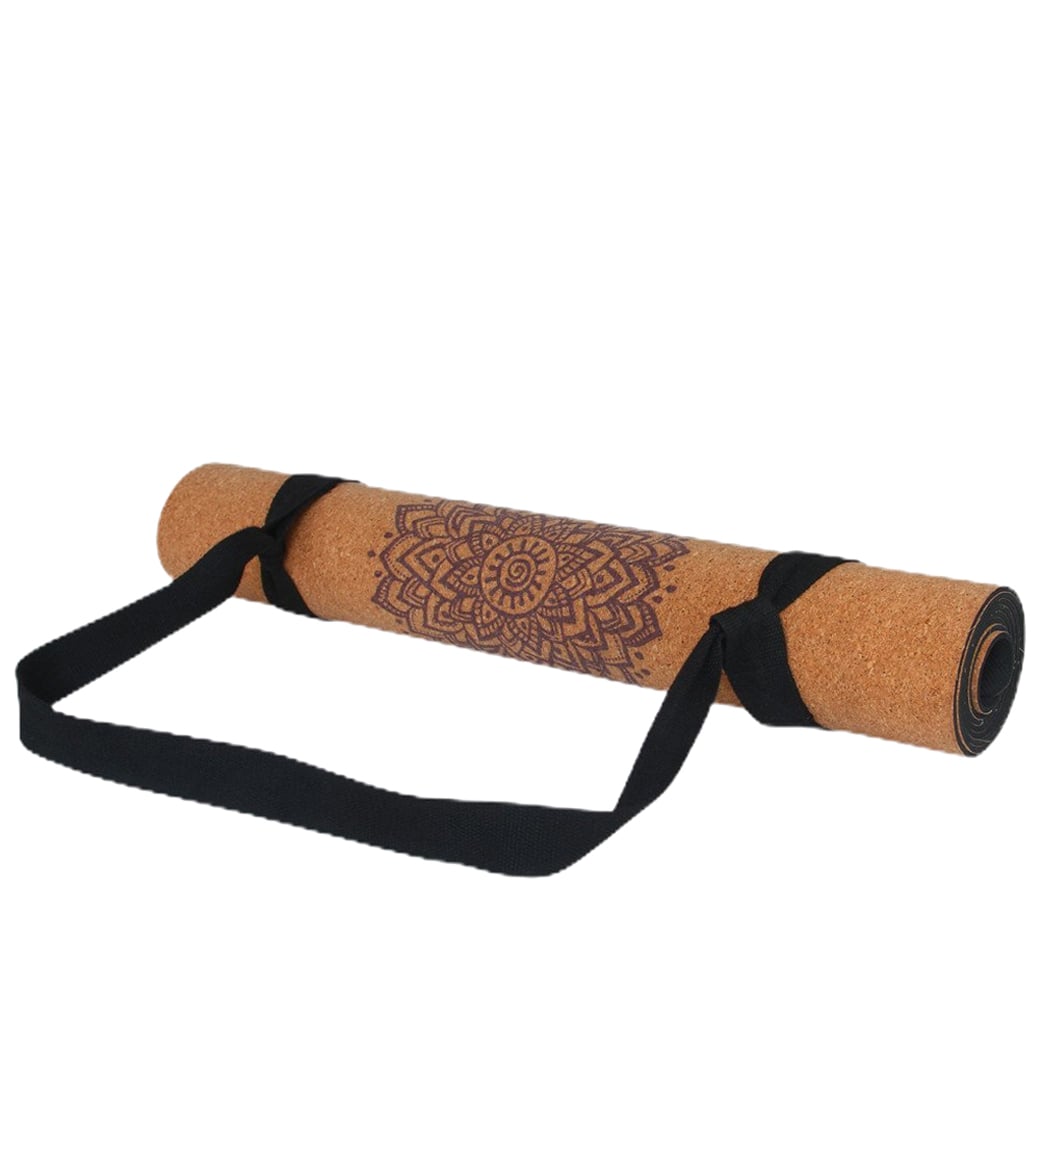 Shakti Warrior Chakra Pro Cork Yoga Mat 72 3mm at EverydayYoga